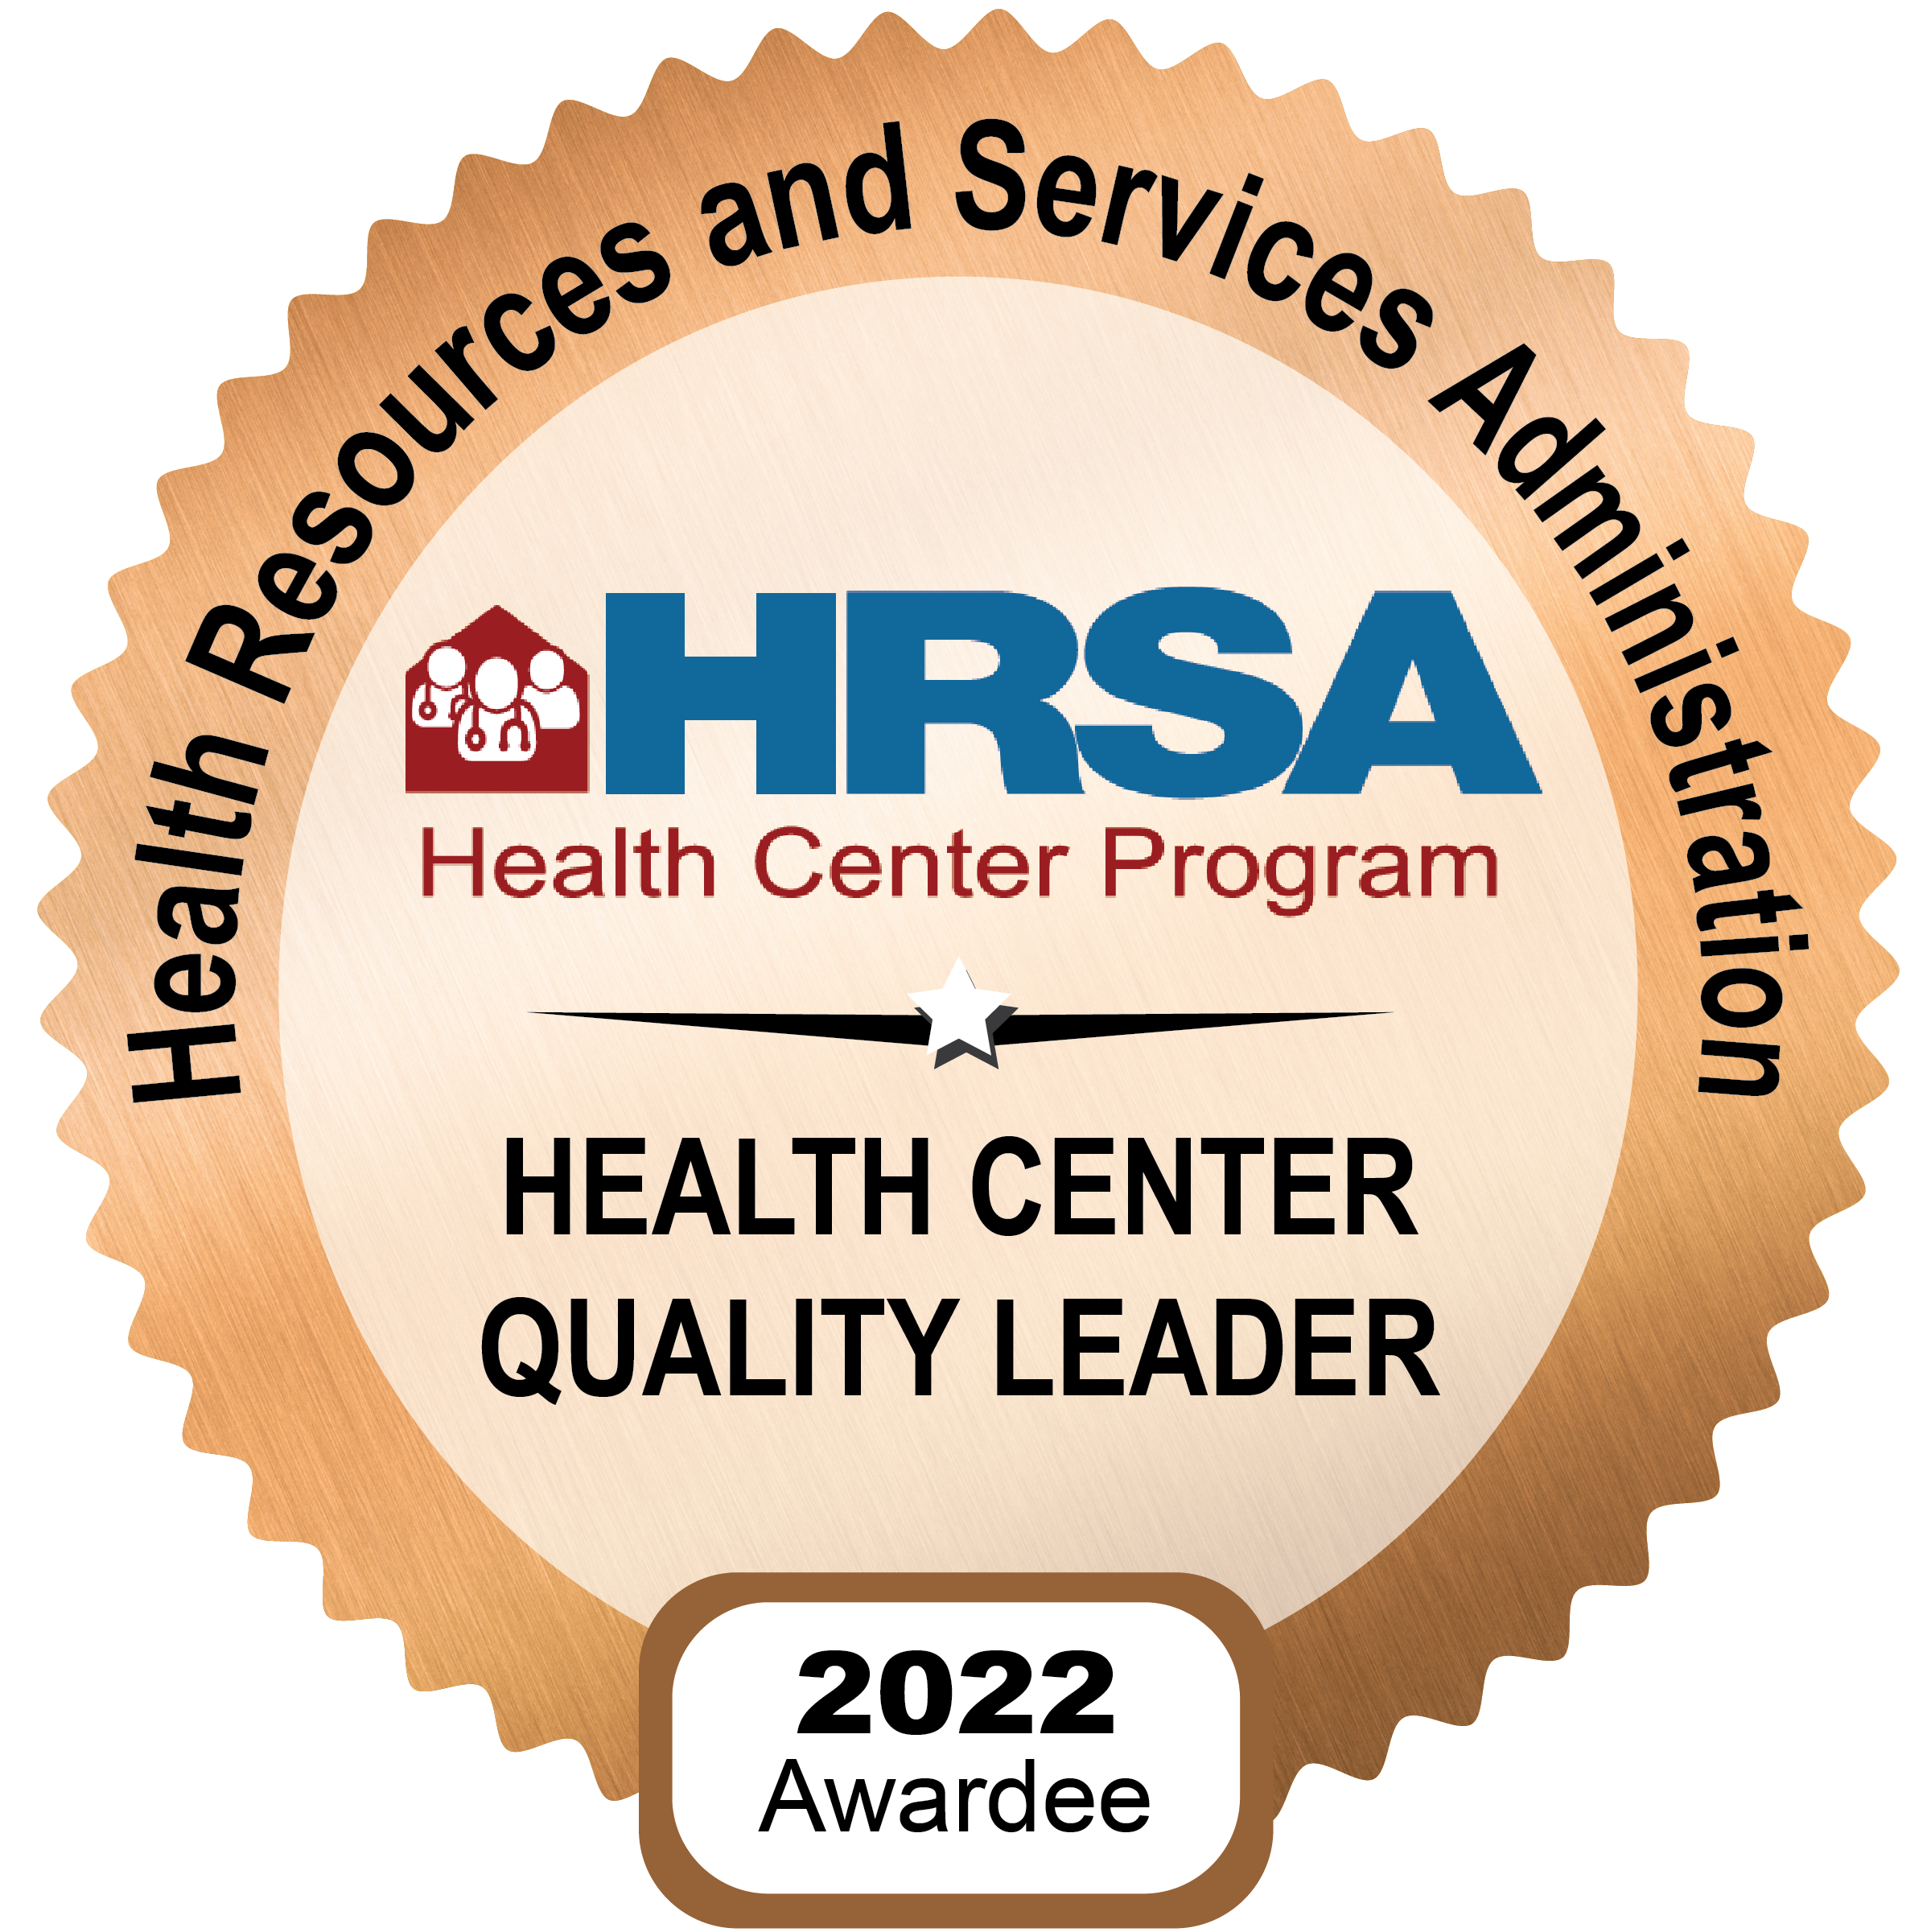 CHC designated as Health Center Quality Leader